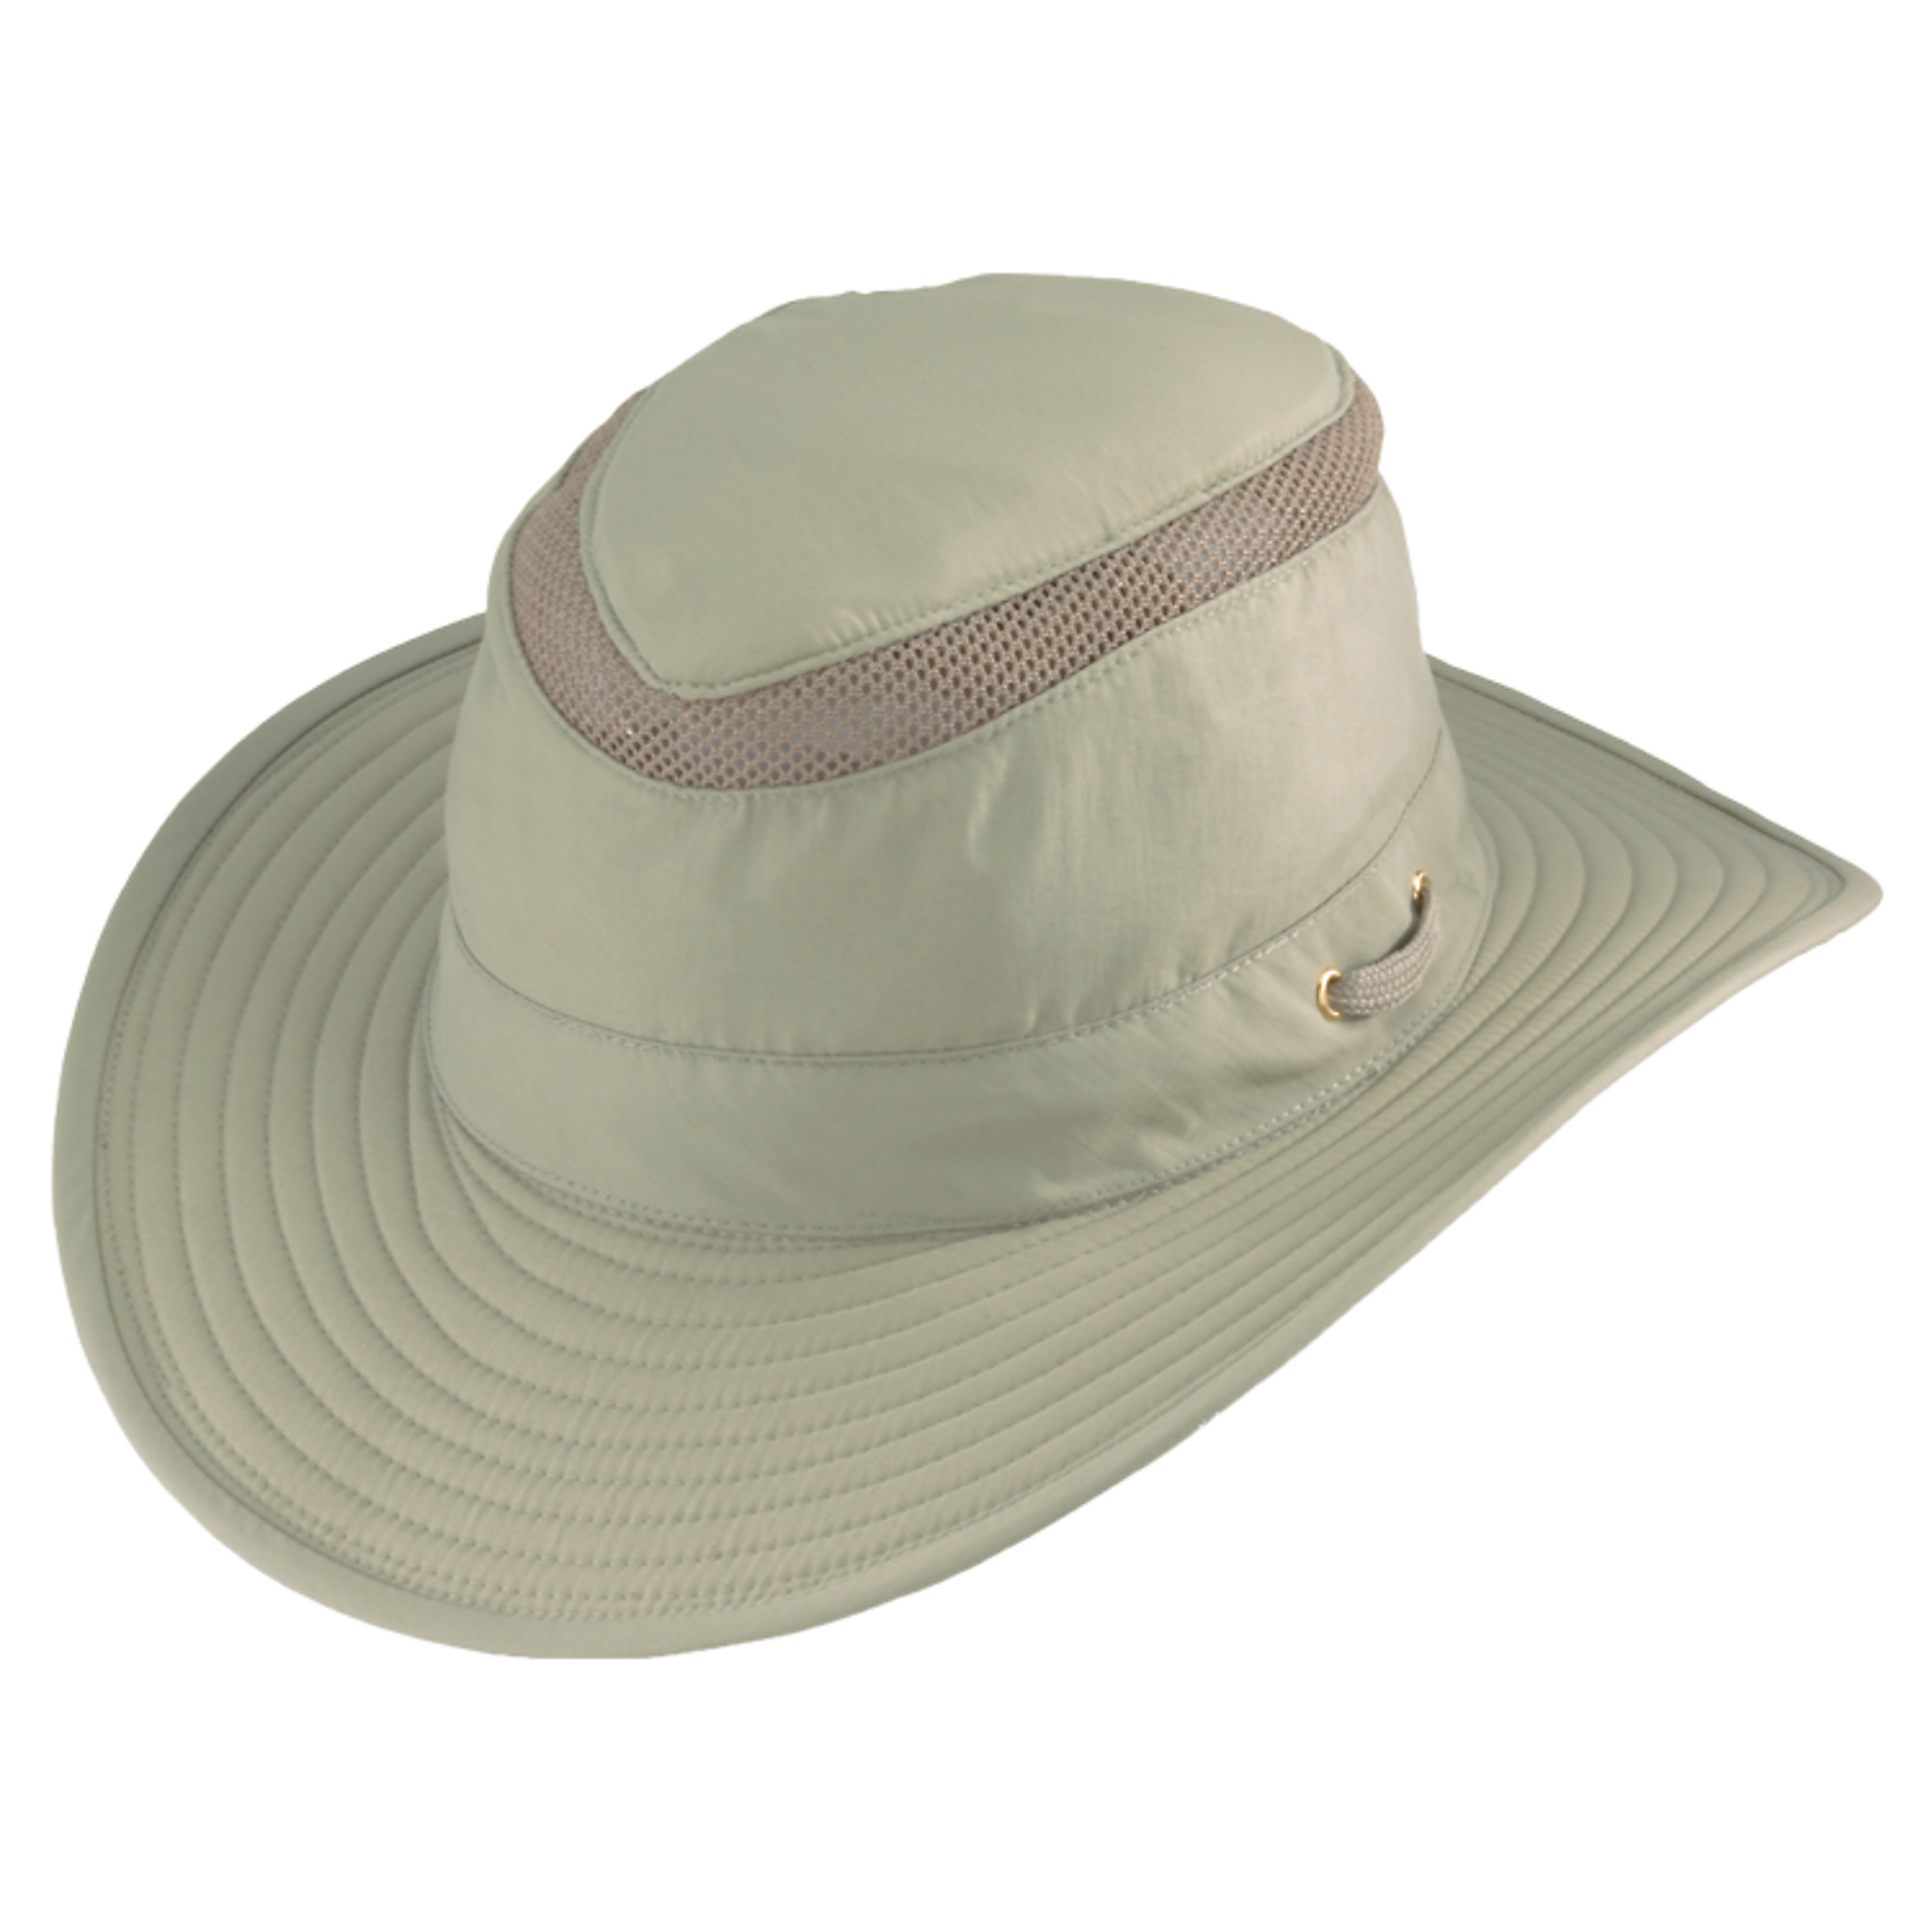 Henschel Hat Company, Camper Booney Hat, UPF 50+, Size L, Color Tan, Hat Style Hat, Model 5552-13-L